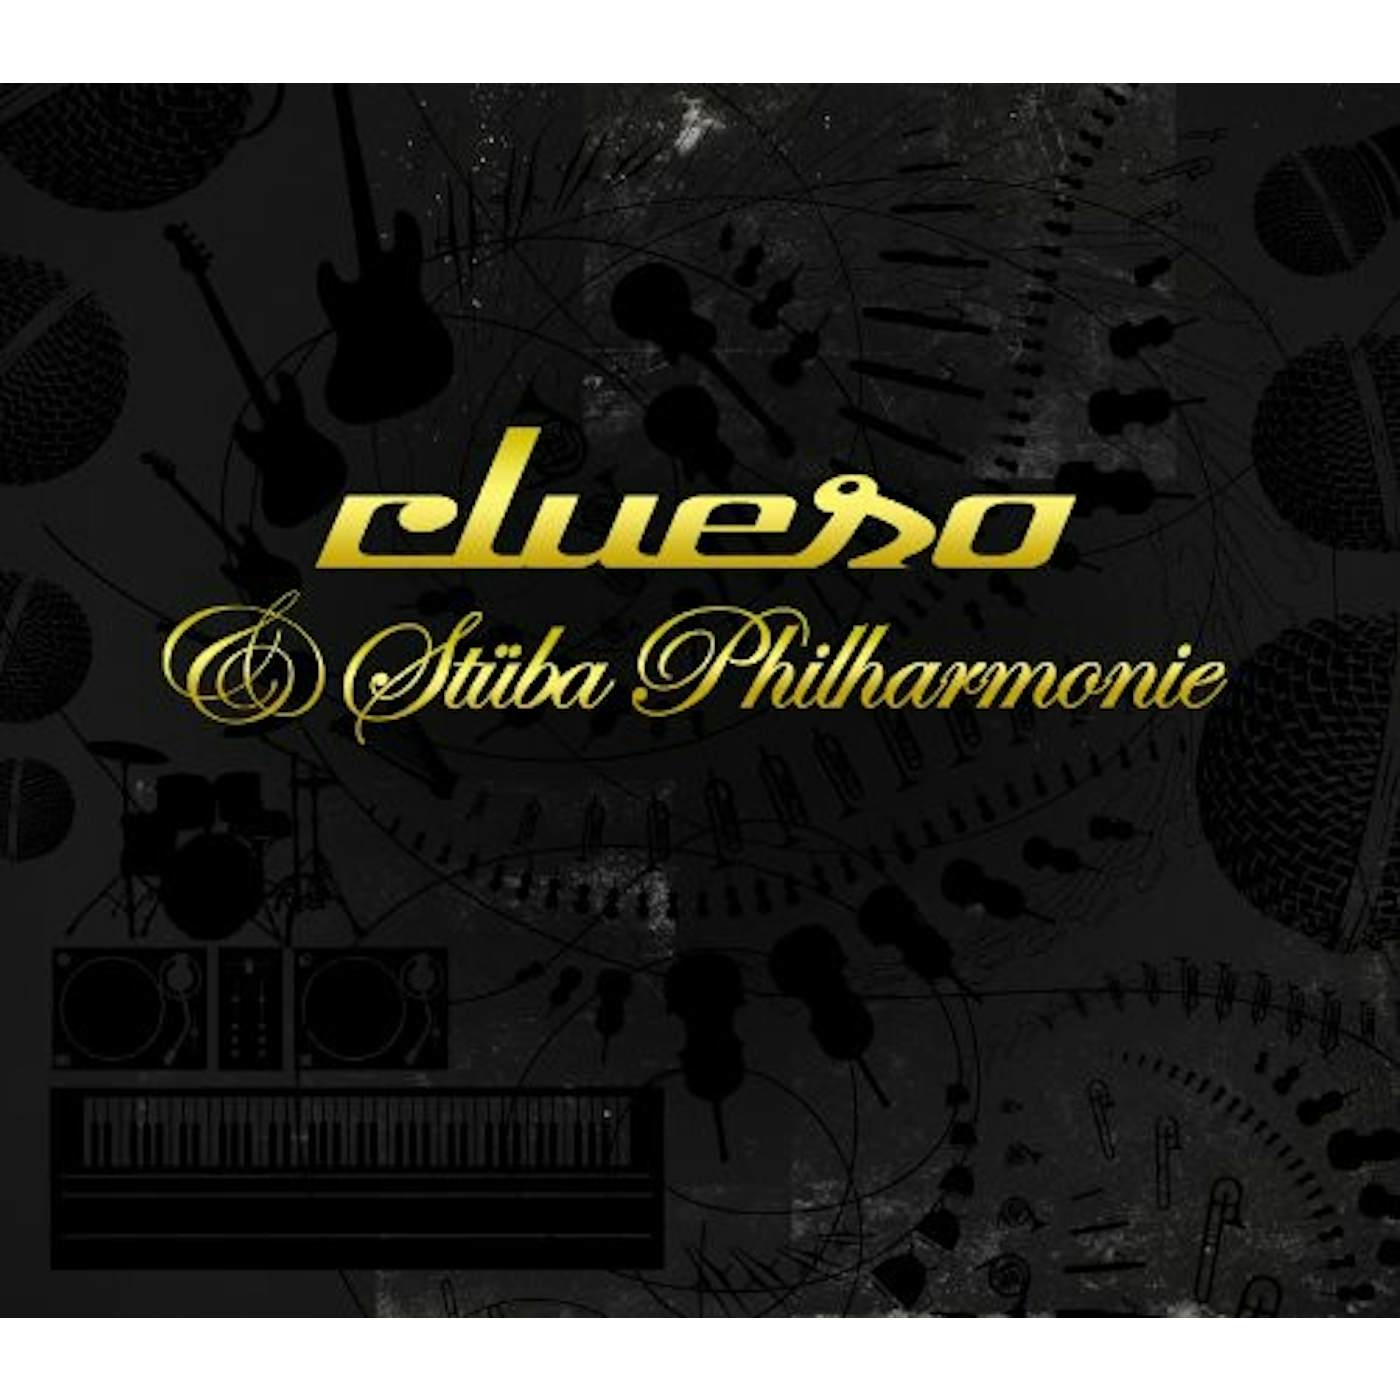 CLUESO & STUBAPHILHARMONIE CD